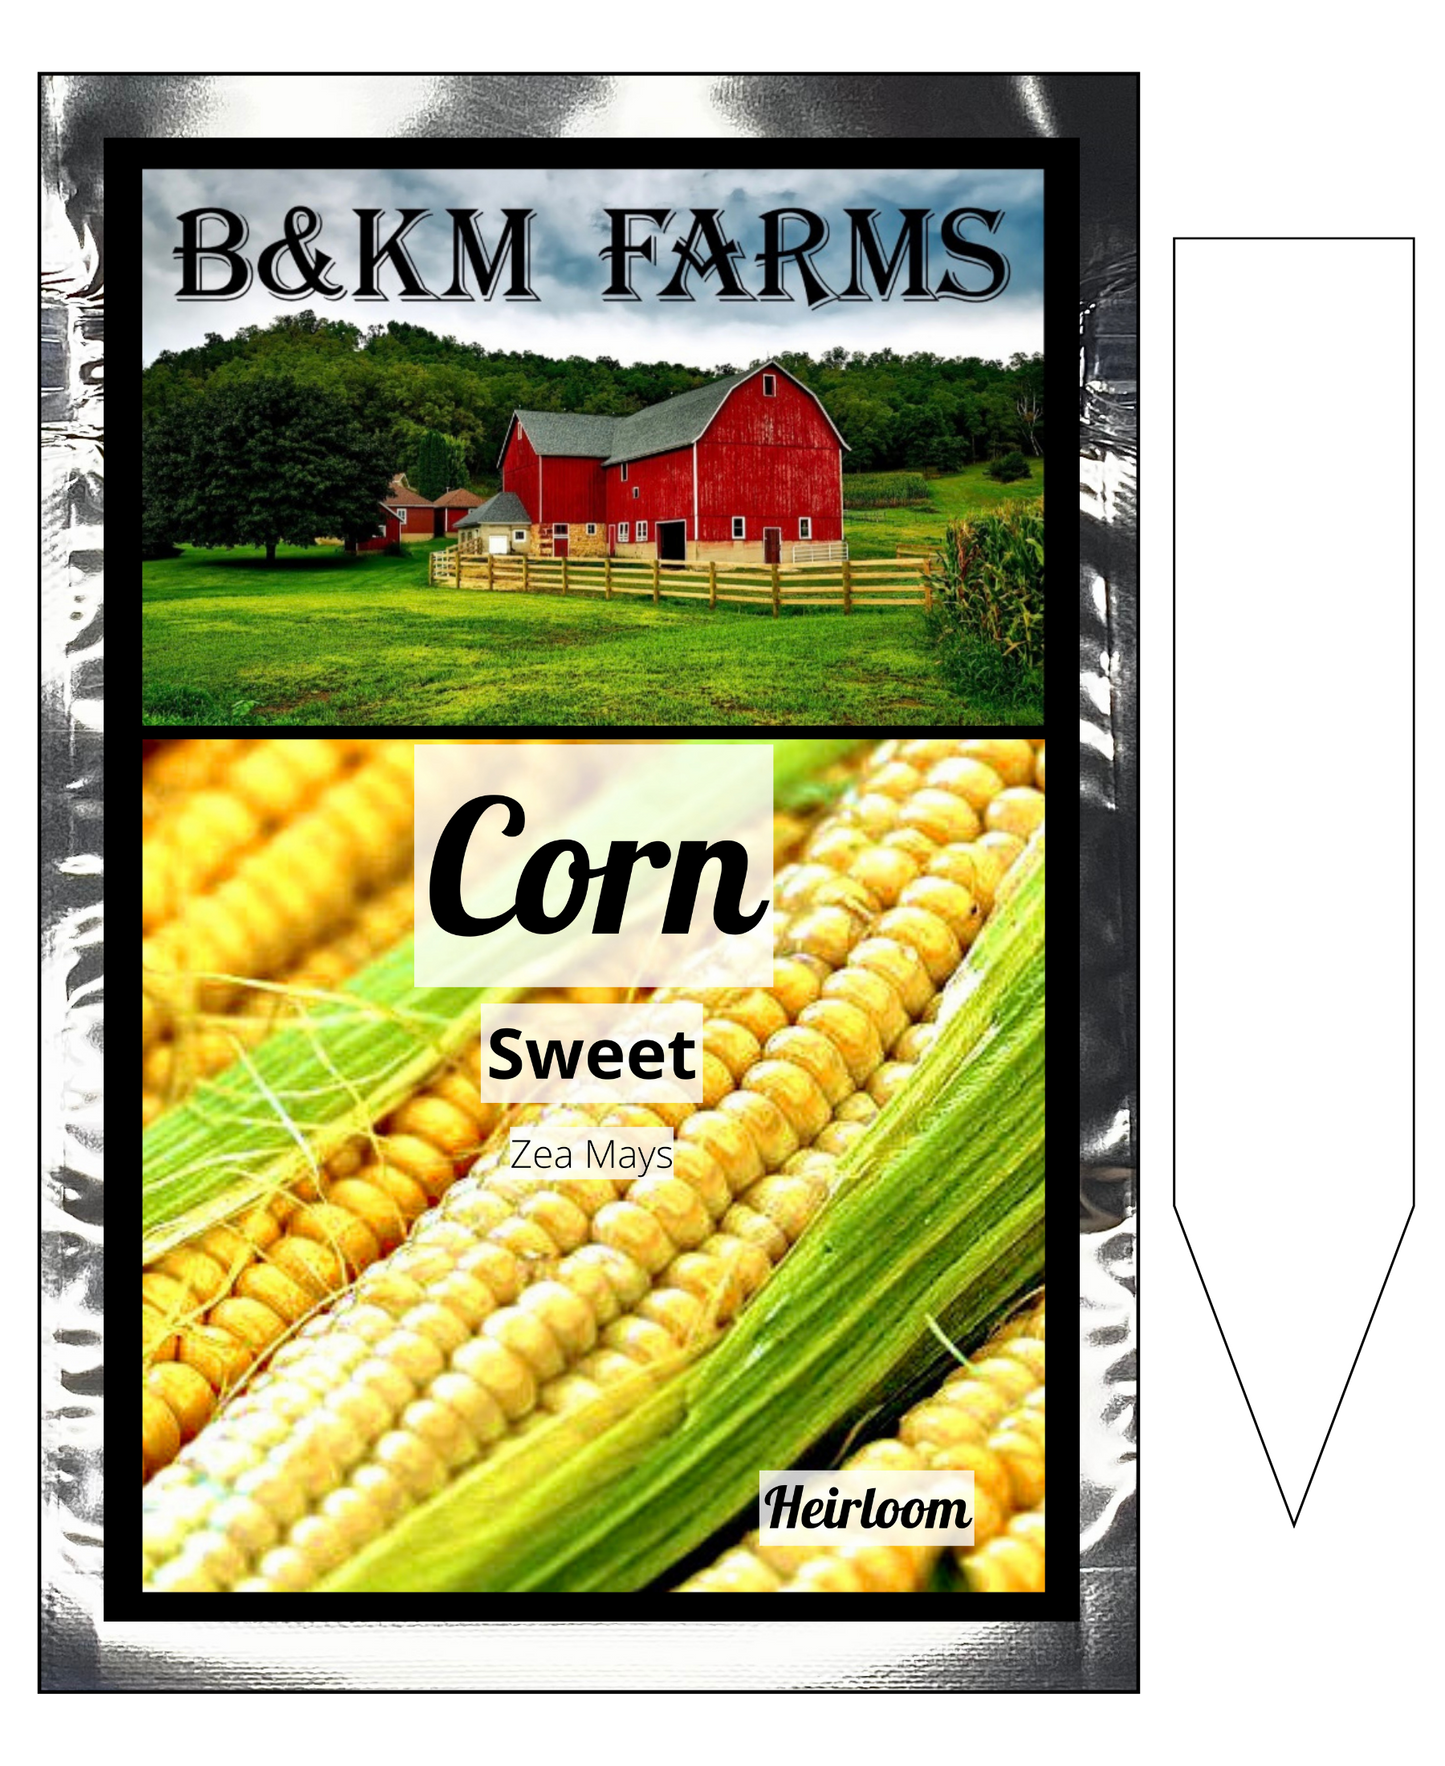 Golden Bantam: The Classic Corn, Reimagined